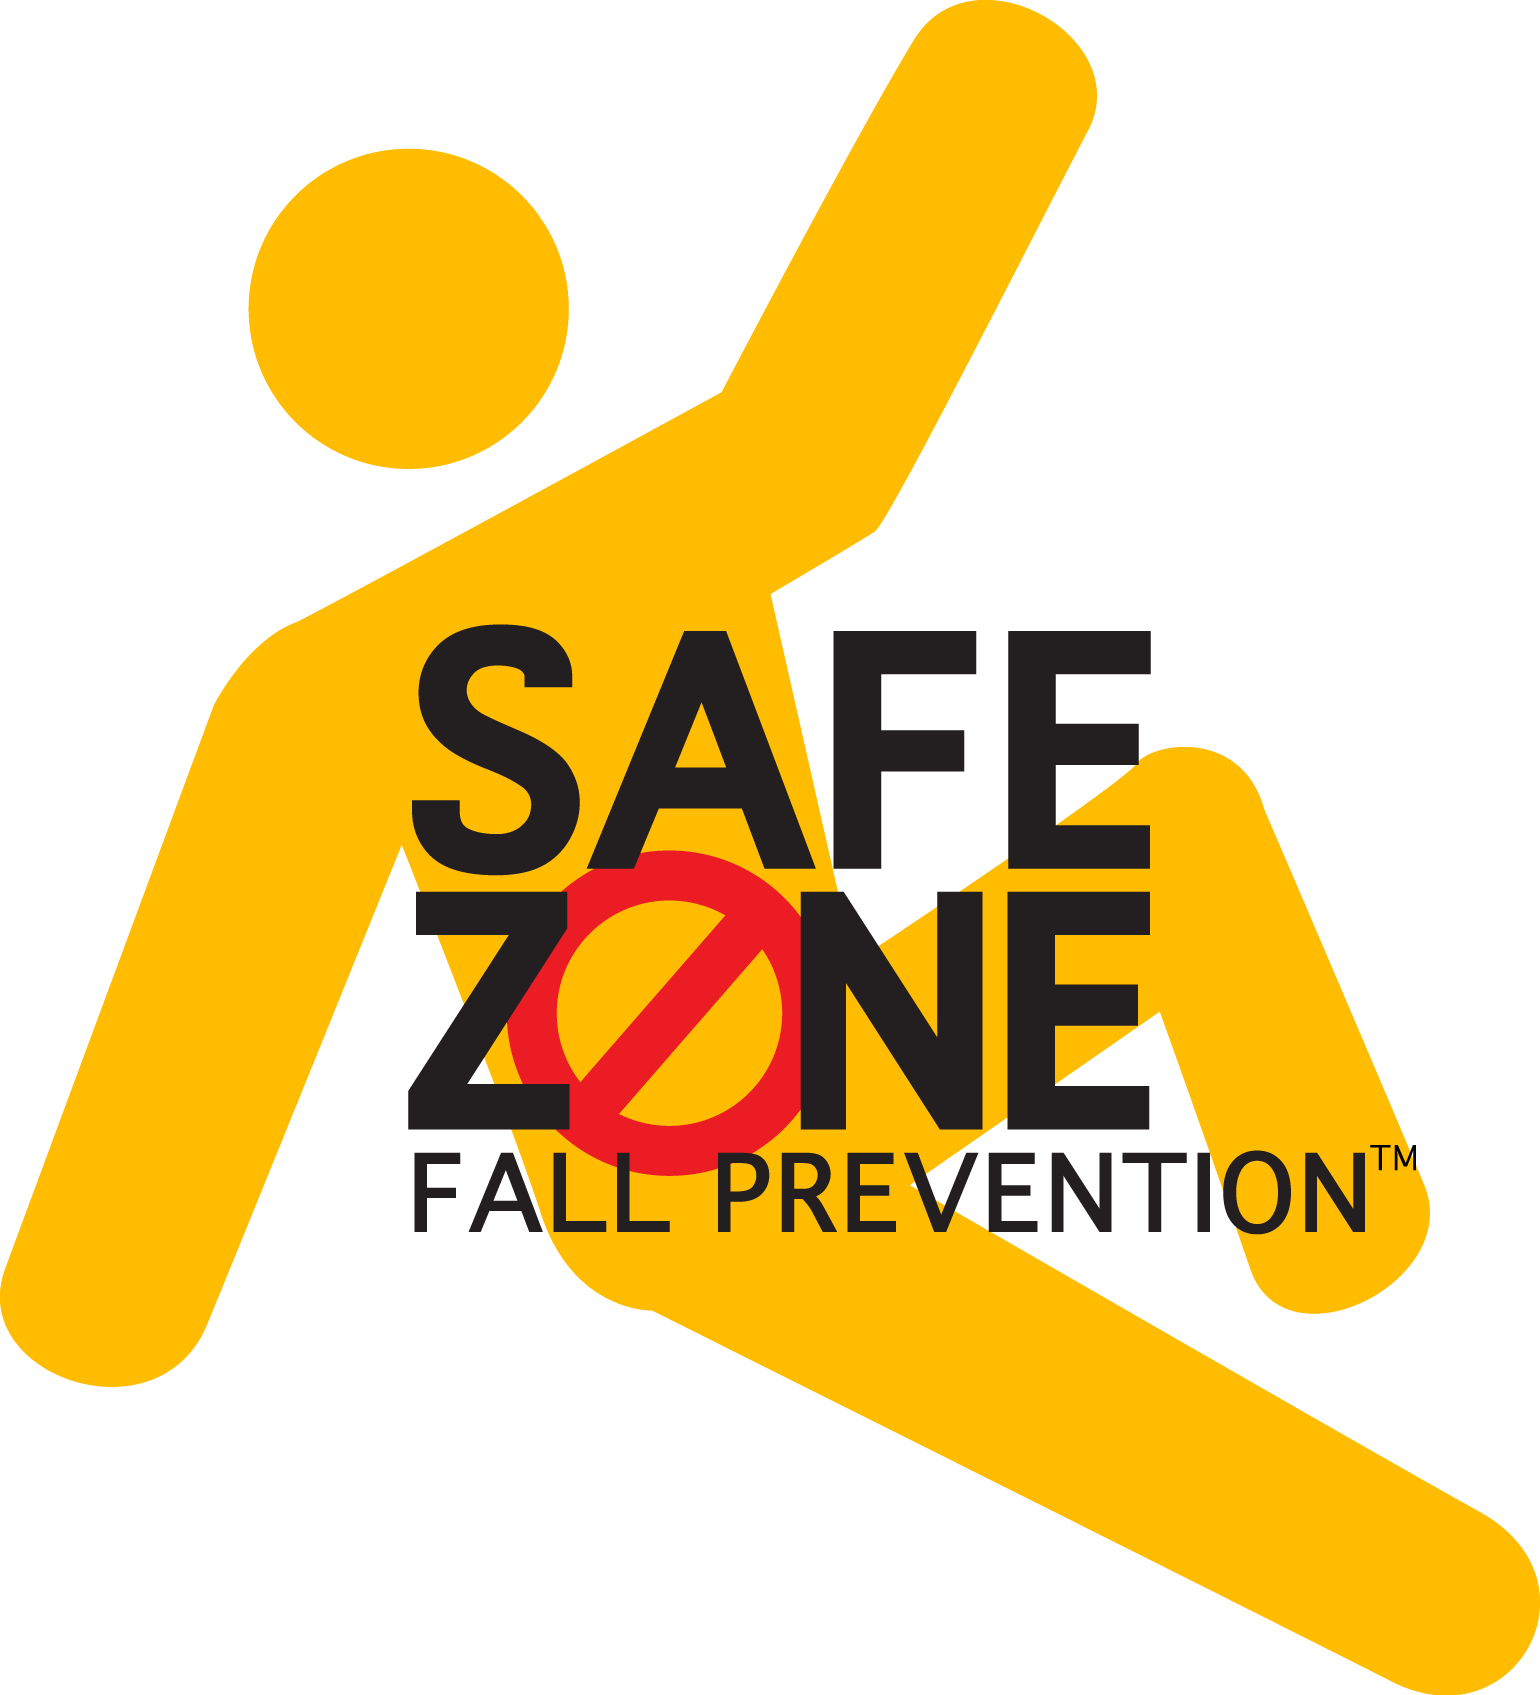 Comprehensive Program Makes Your Community A Safe Zone